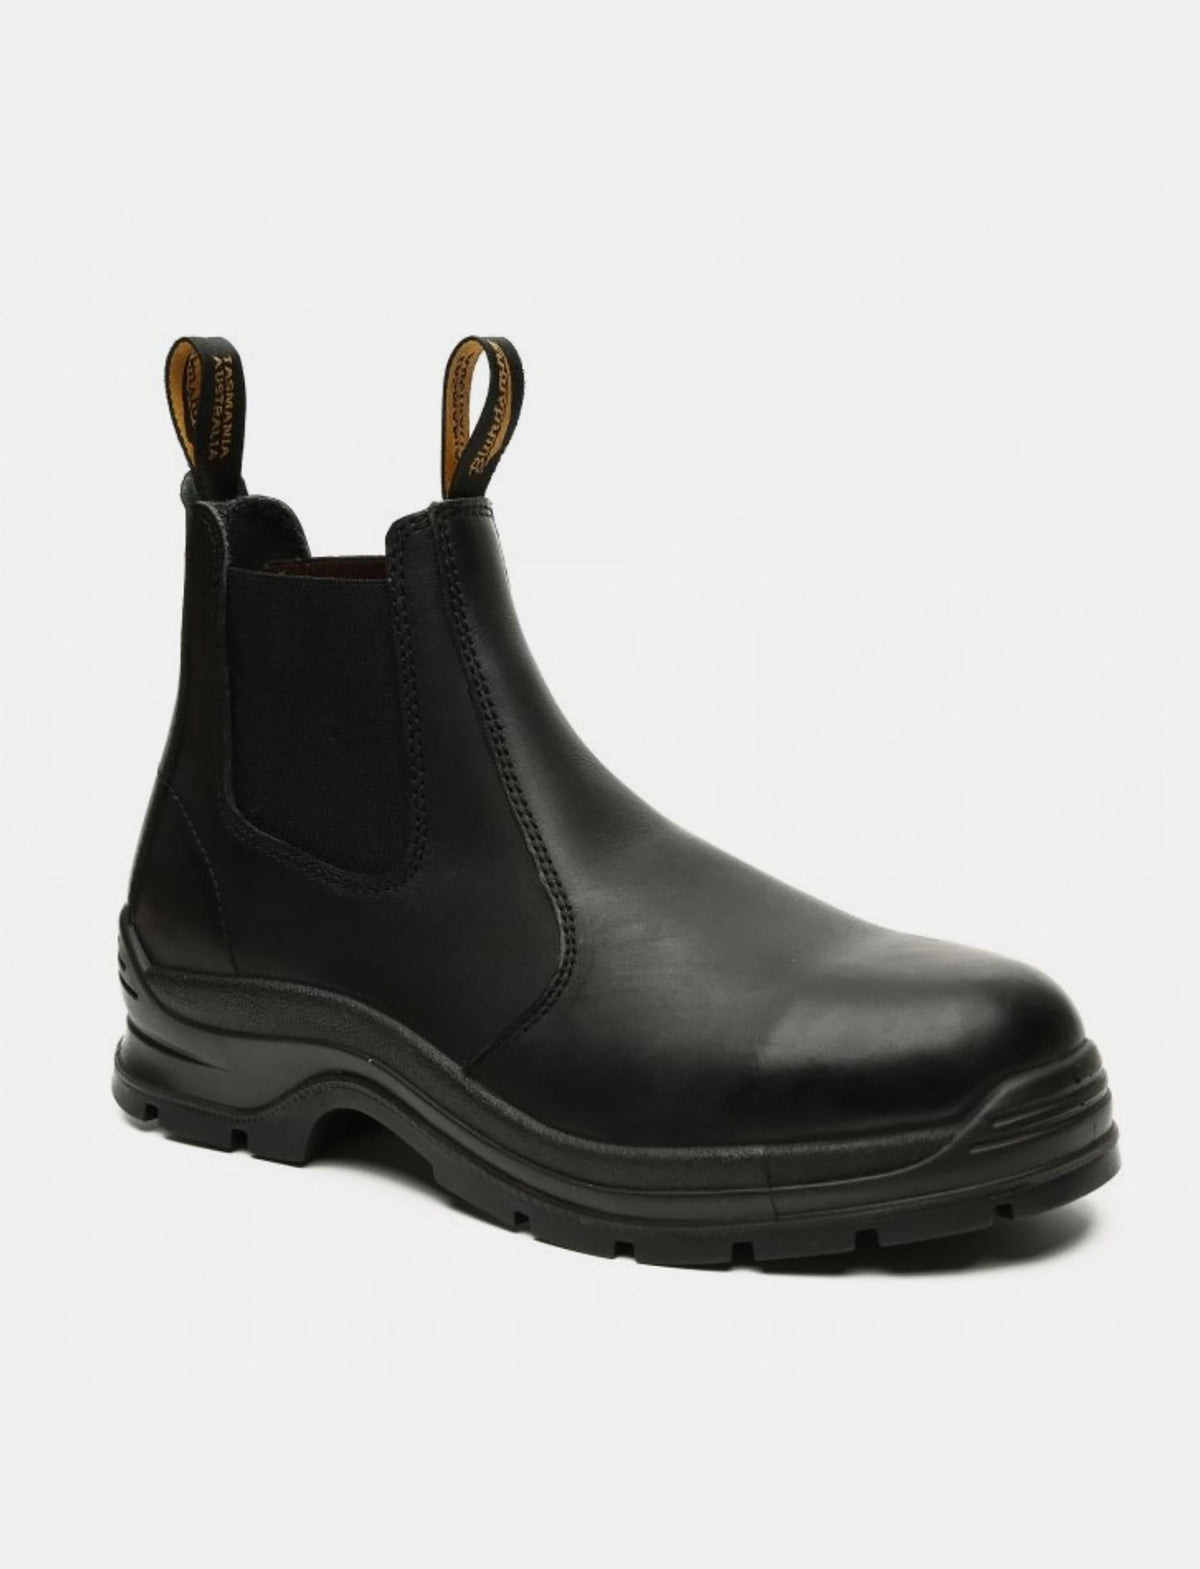 Blundstone 406 - נעלי בלנסטון גברים בצבע שחור-Blundstone-39-נאקו